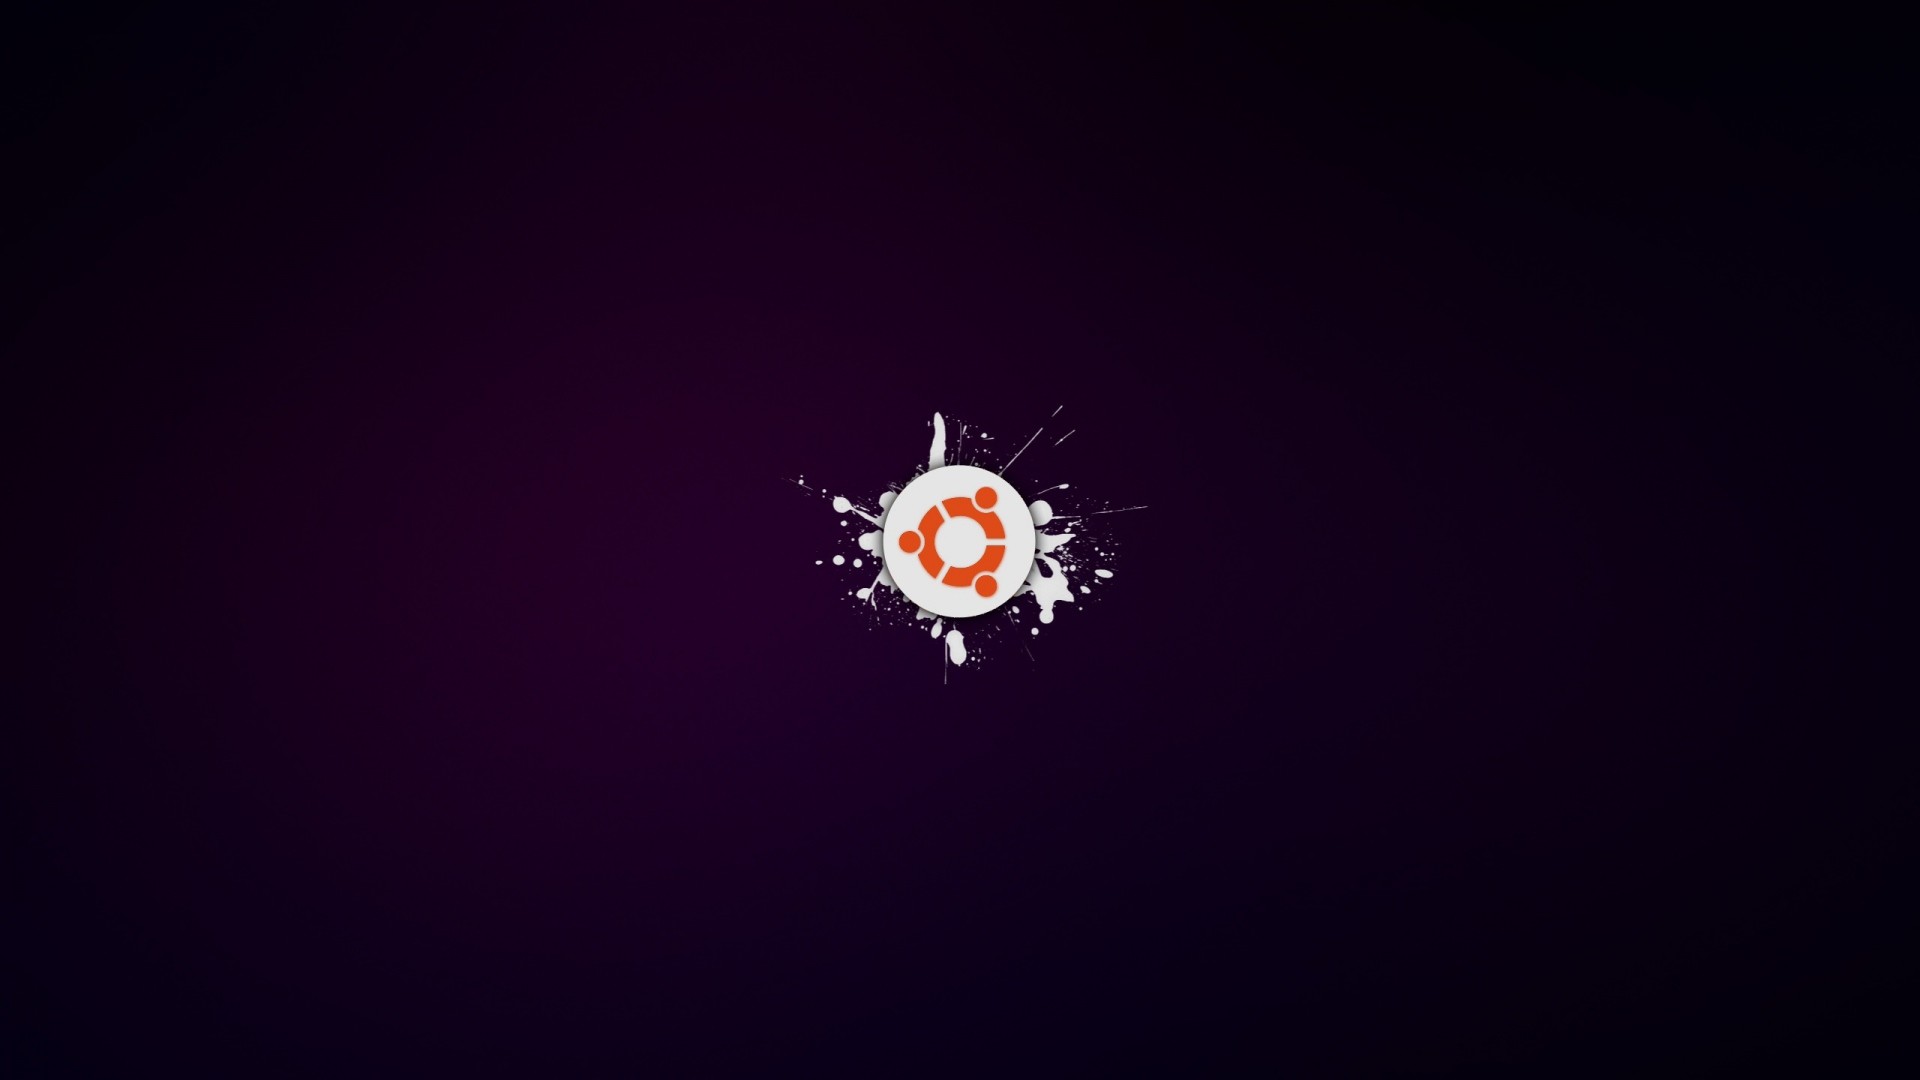 1920x1080 Download now full hd wallpaper ubuntu linux logo spray ...